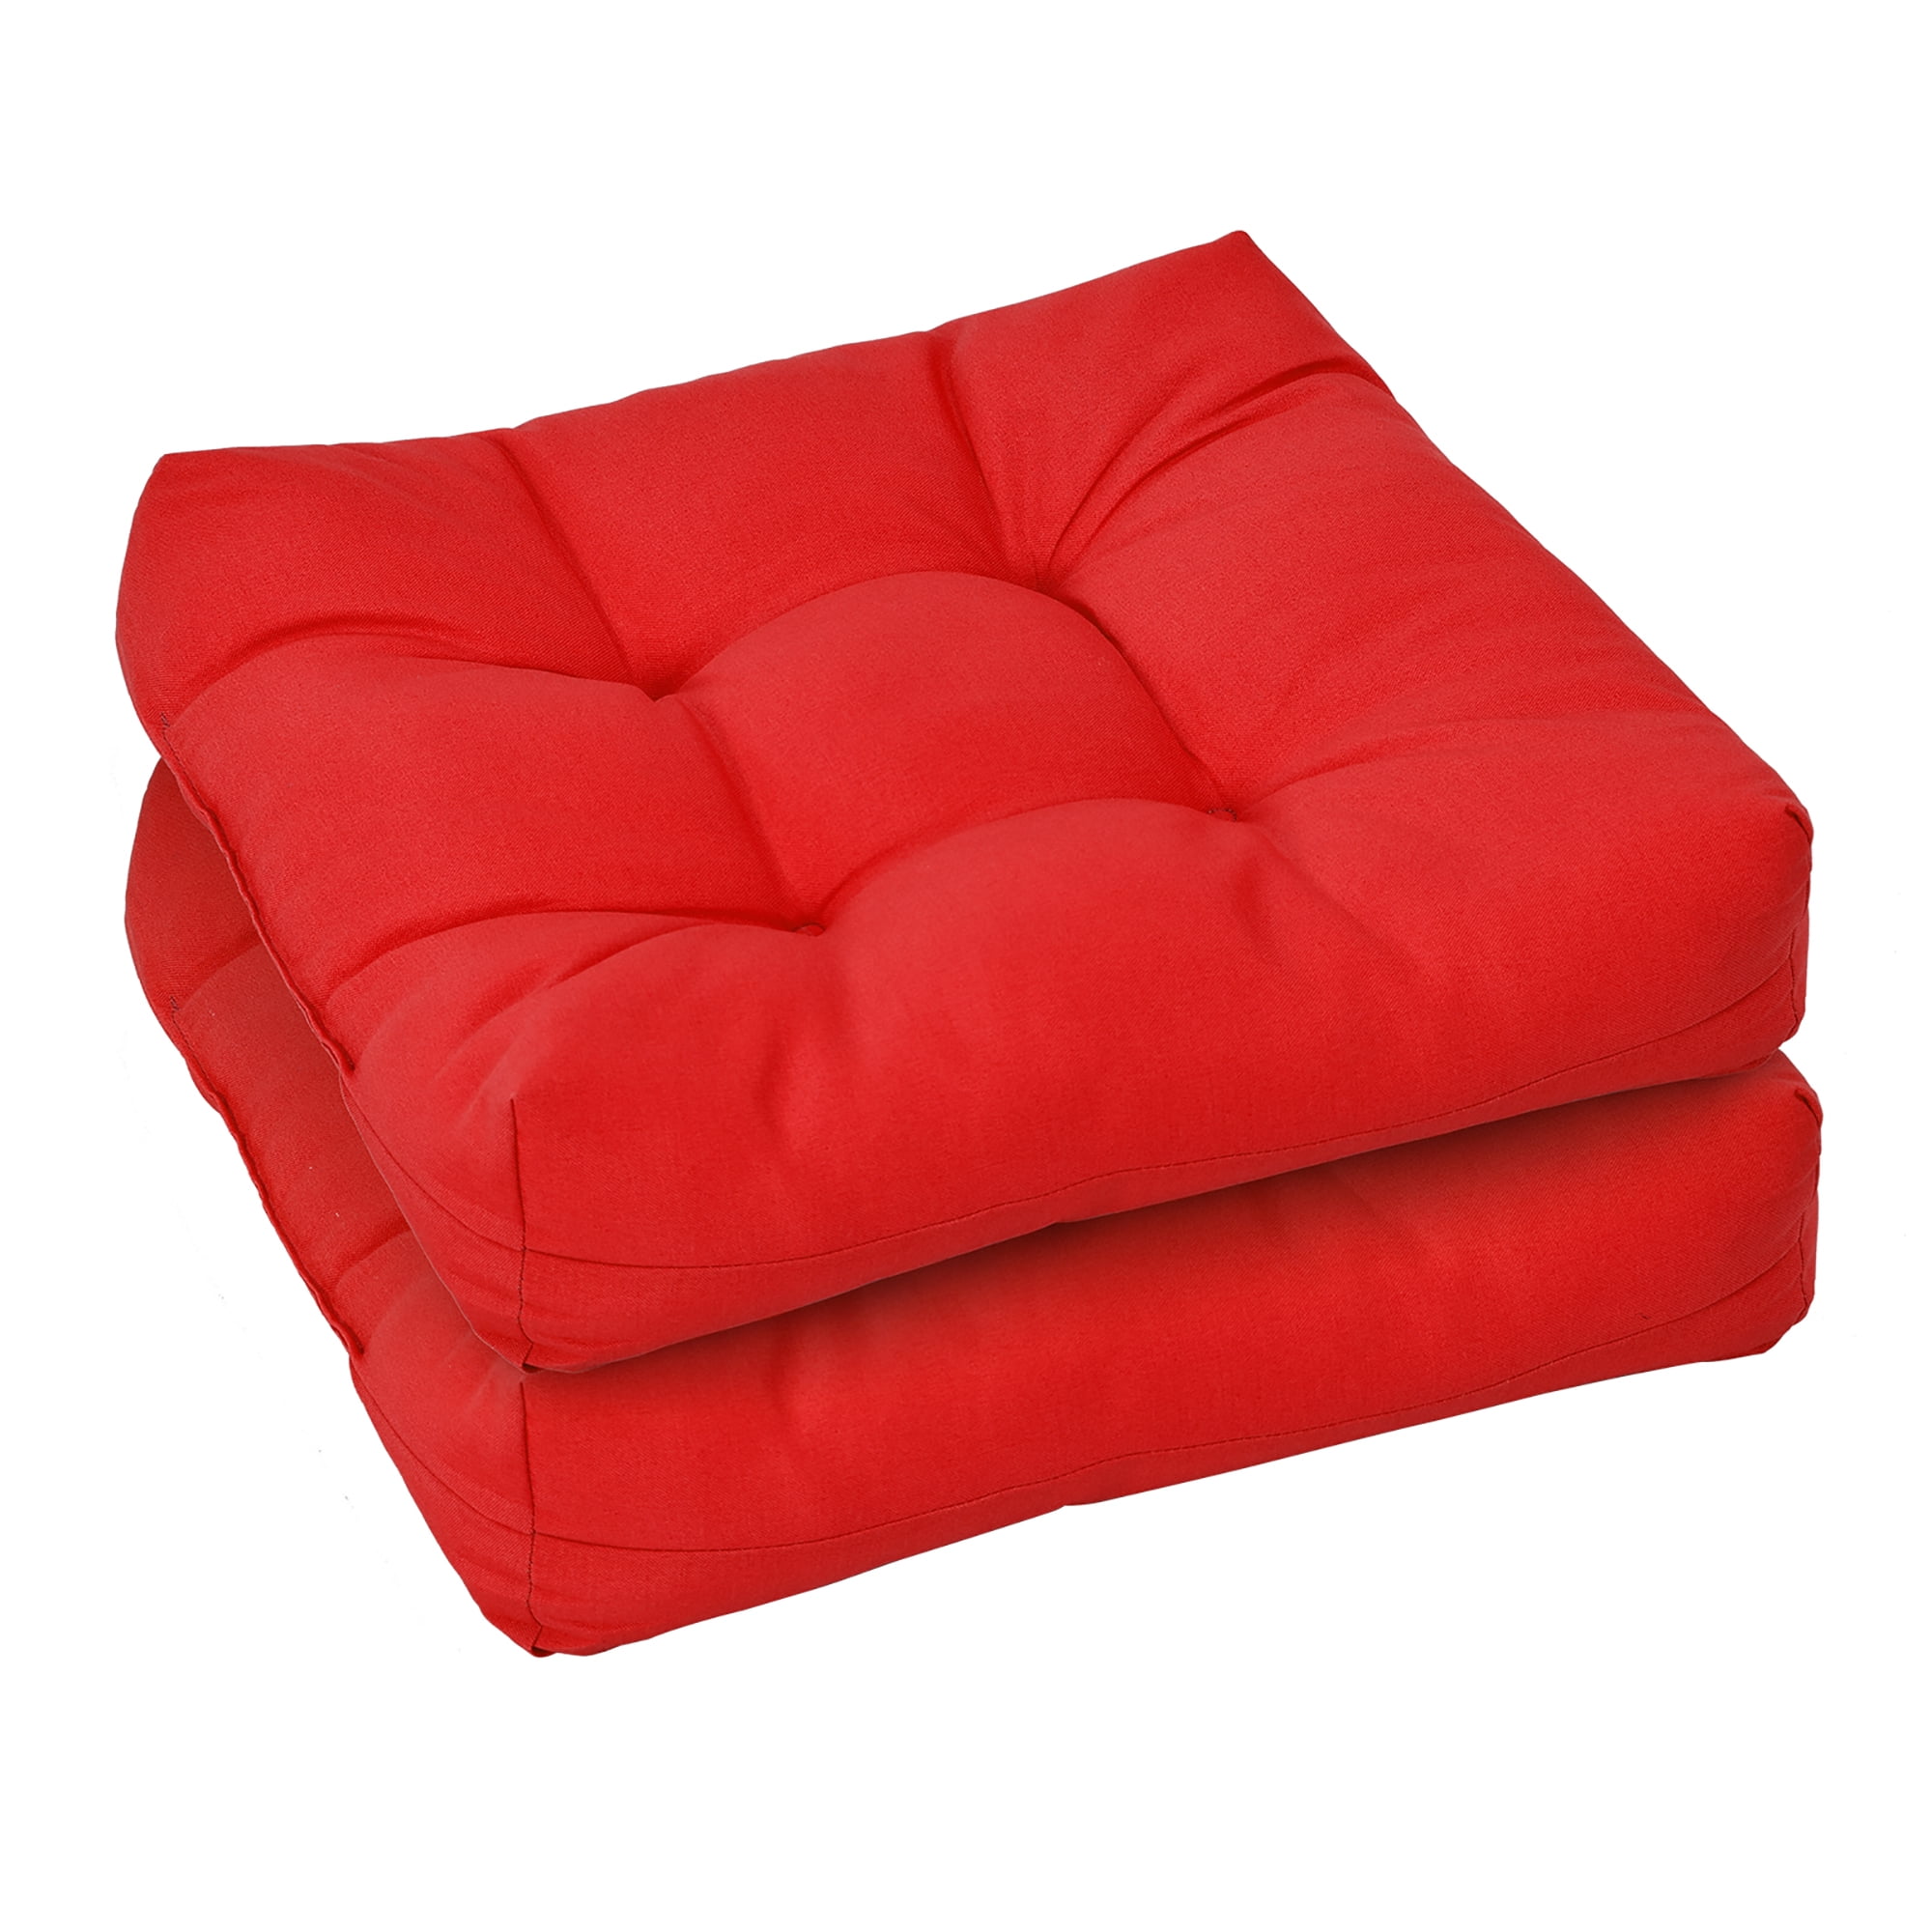 Padded Double Bingo Seat Cushion Red VERY GOOD CONDITION ChuckBooks📚